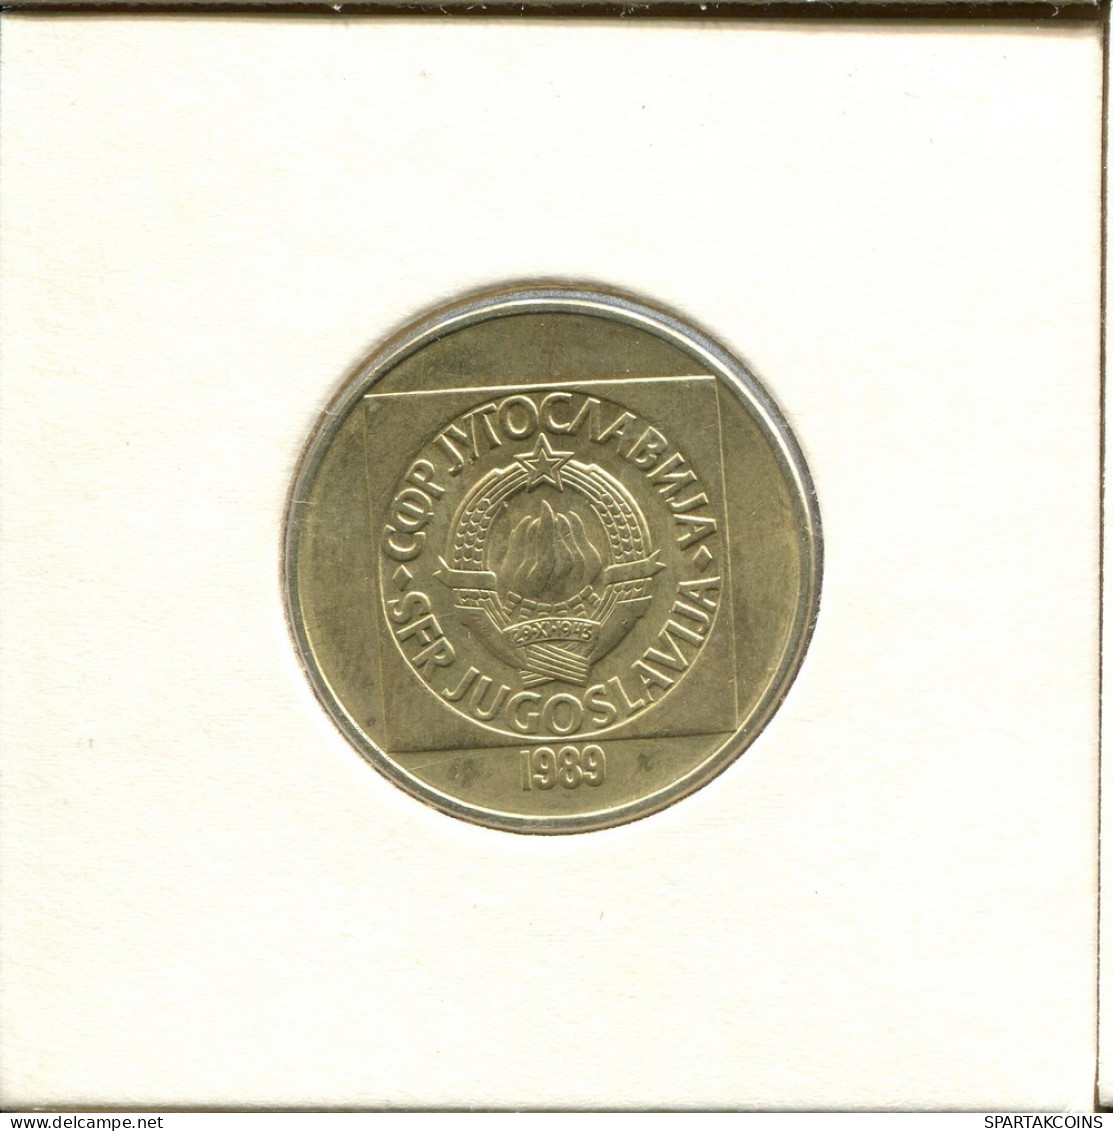 100 DINARA 1989 YUGOSLAVIA Coin #AS610.U.A - Jugoslawien